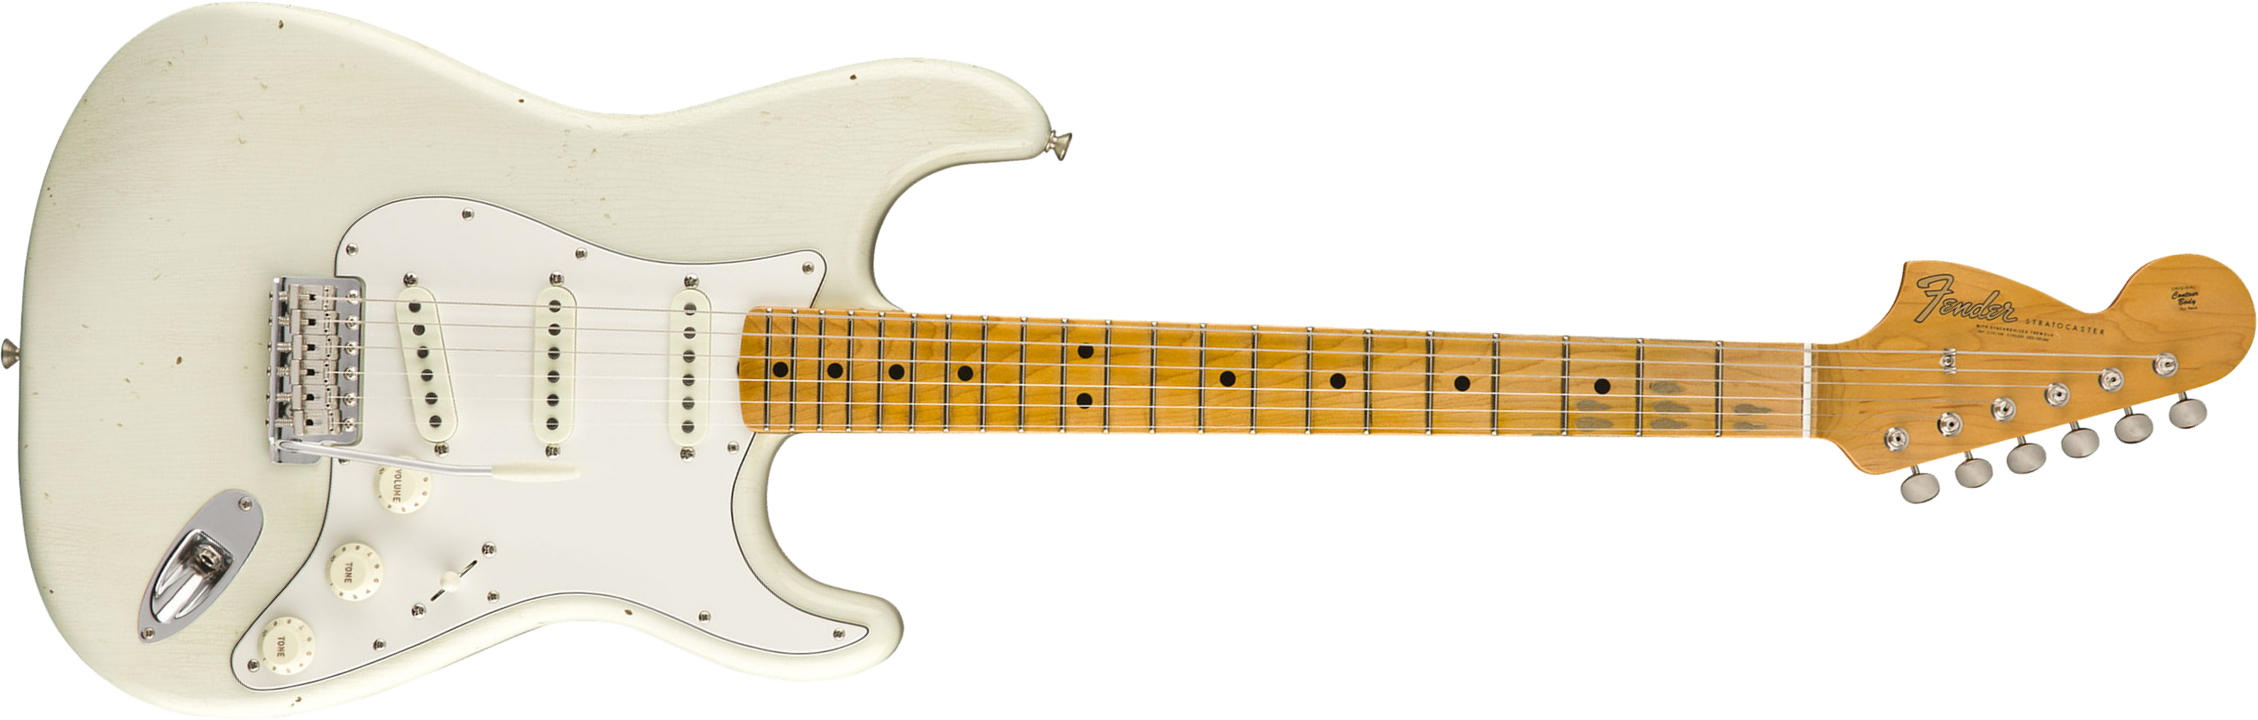 Fender Custom Shop Jimi Hendrix Strat Voodoo Child Signature 2018 Mn - Journeyman Relic Olympic White - Str shape electric guitar - Main picture